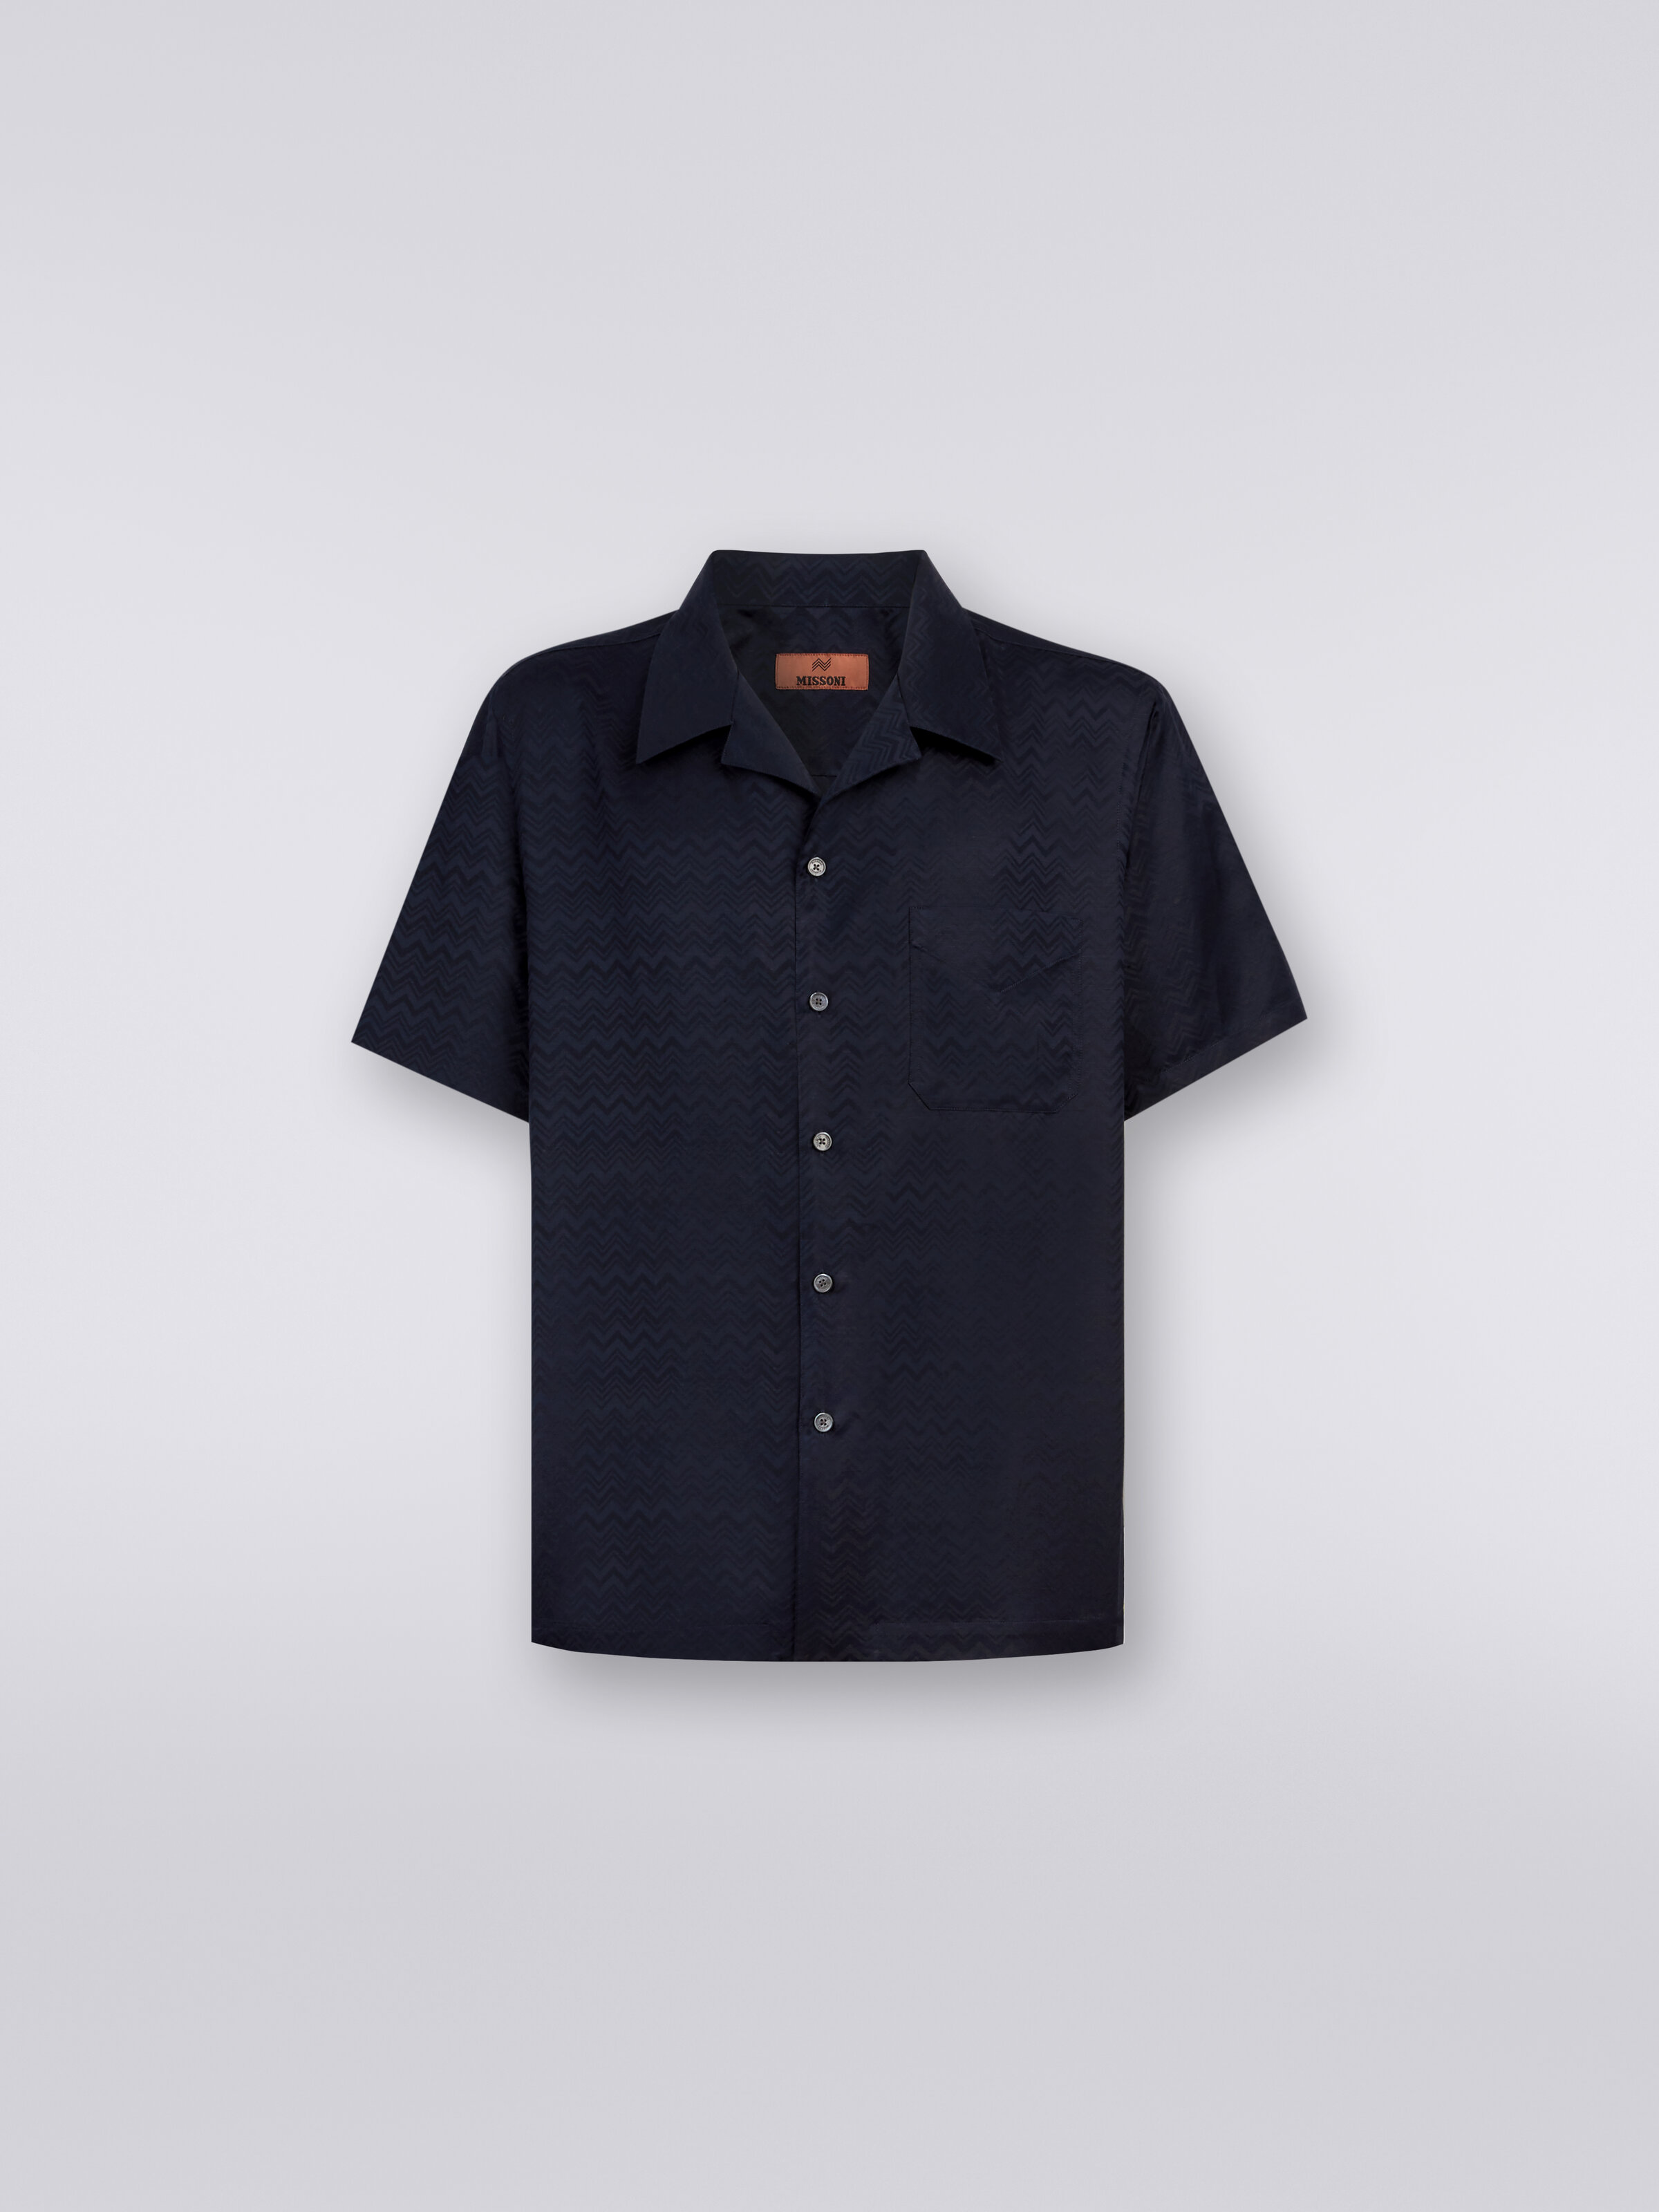 Short-sleeved chevron cotton blend bowling shirt, Dark Blue - 0